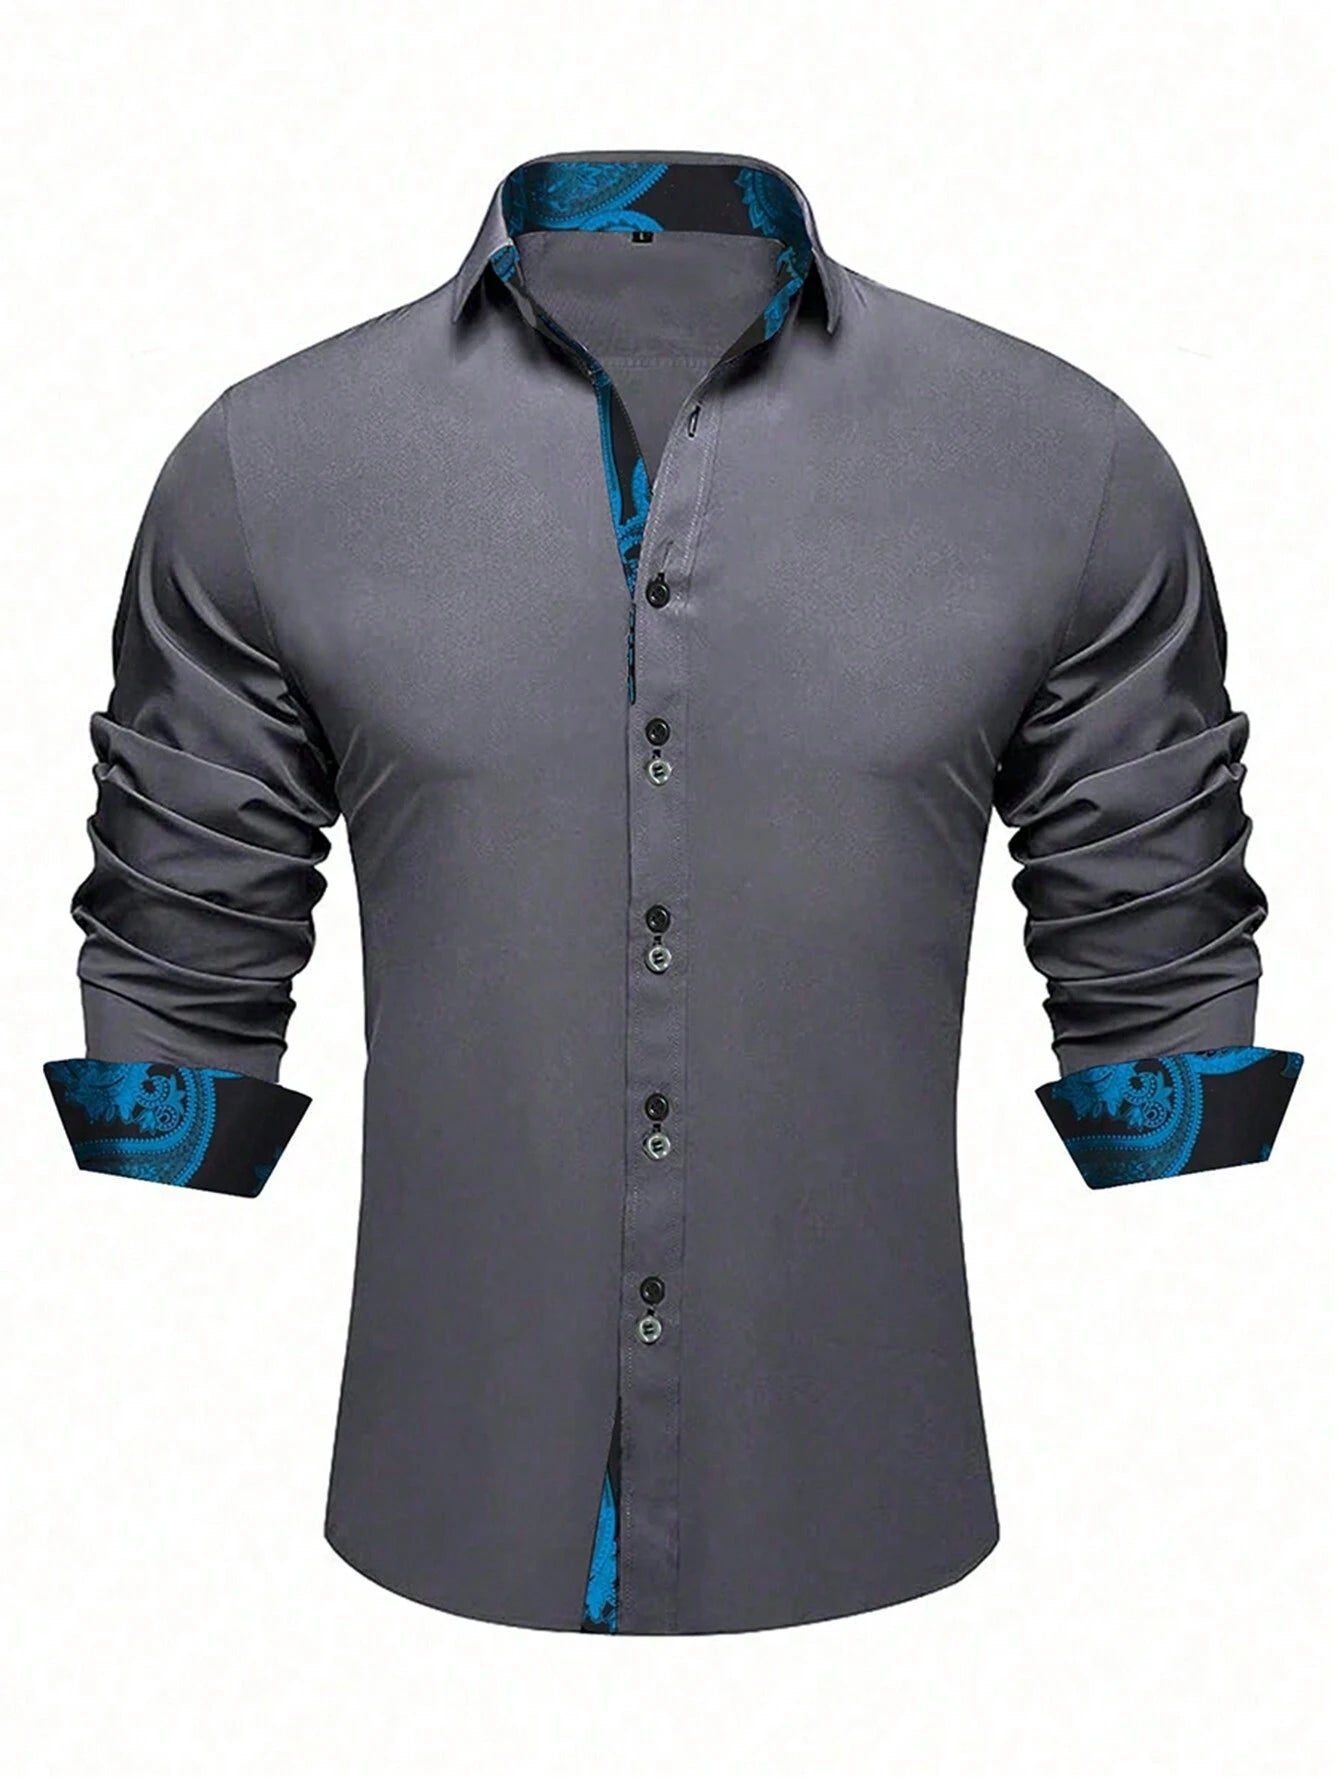 7869 a08-12 Camisa con estampado de paisley con botón